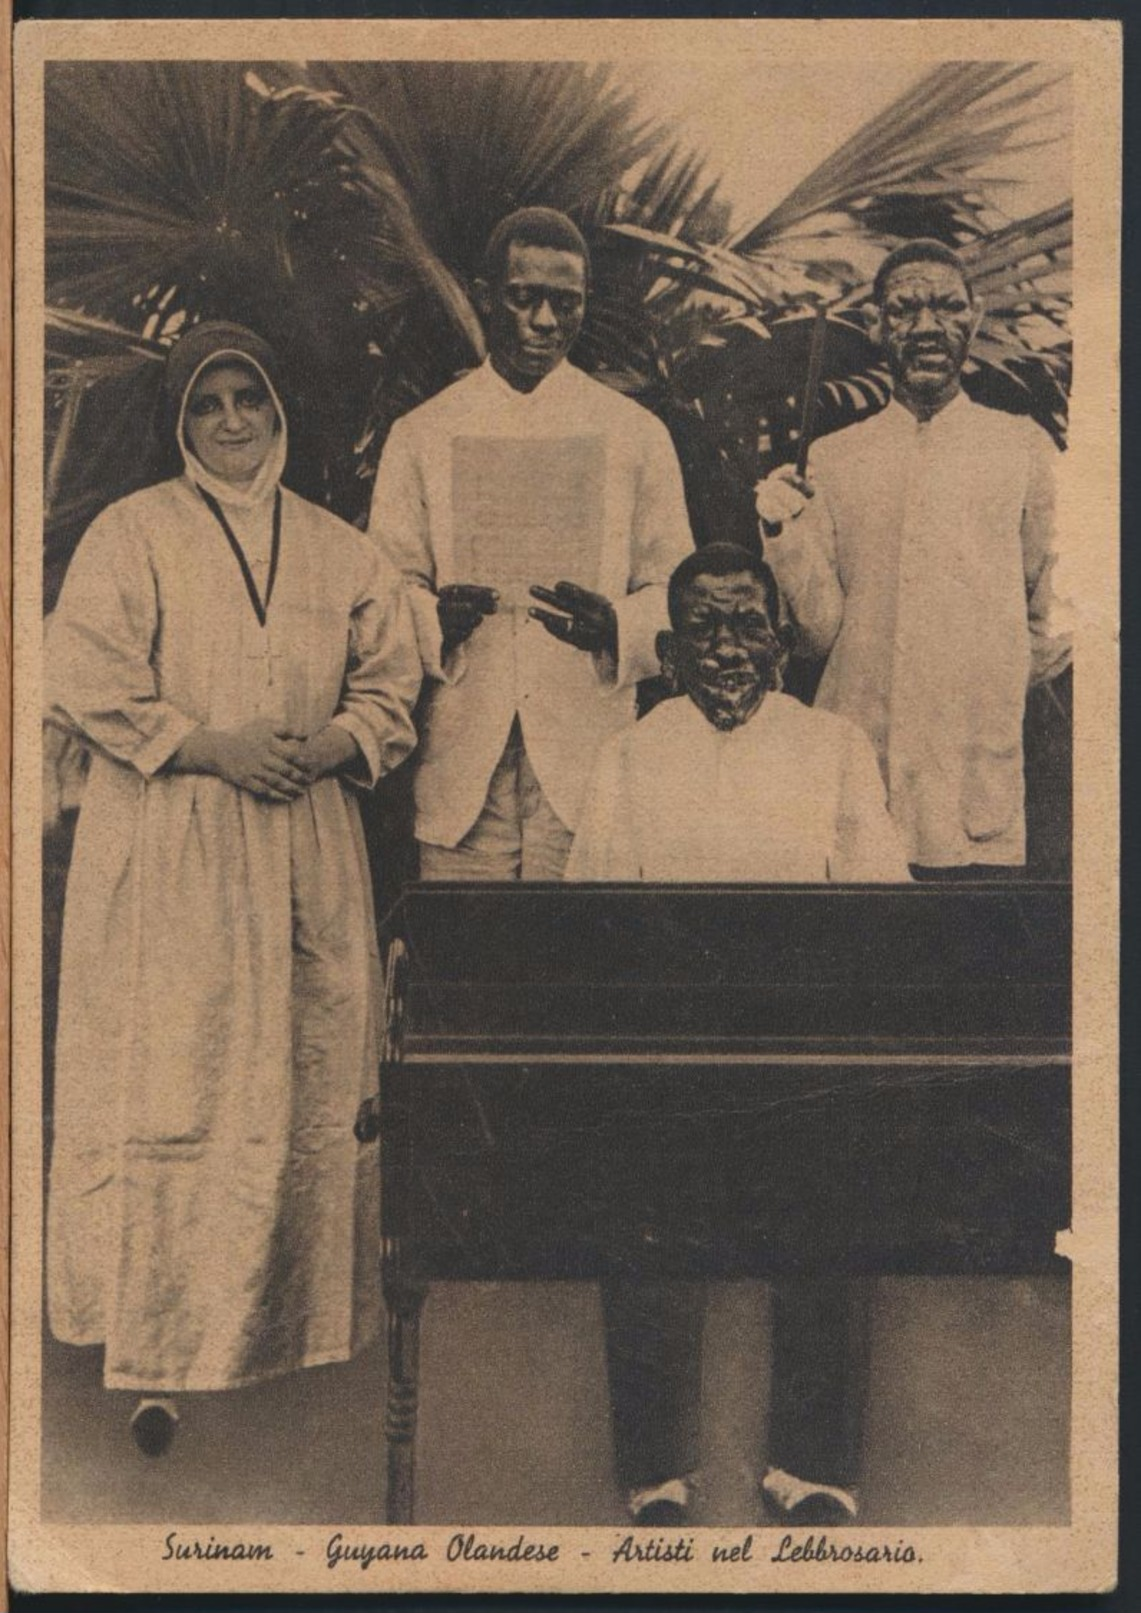 °°° 9152 - SURINAME - GUYANA OLANDESE - ARTISTI NEL LABORATORIO - 1936 °°° - Suriname